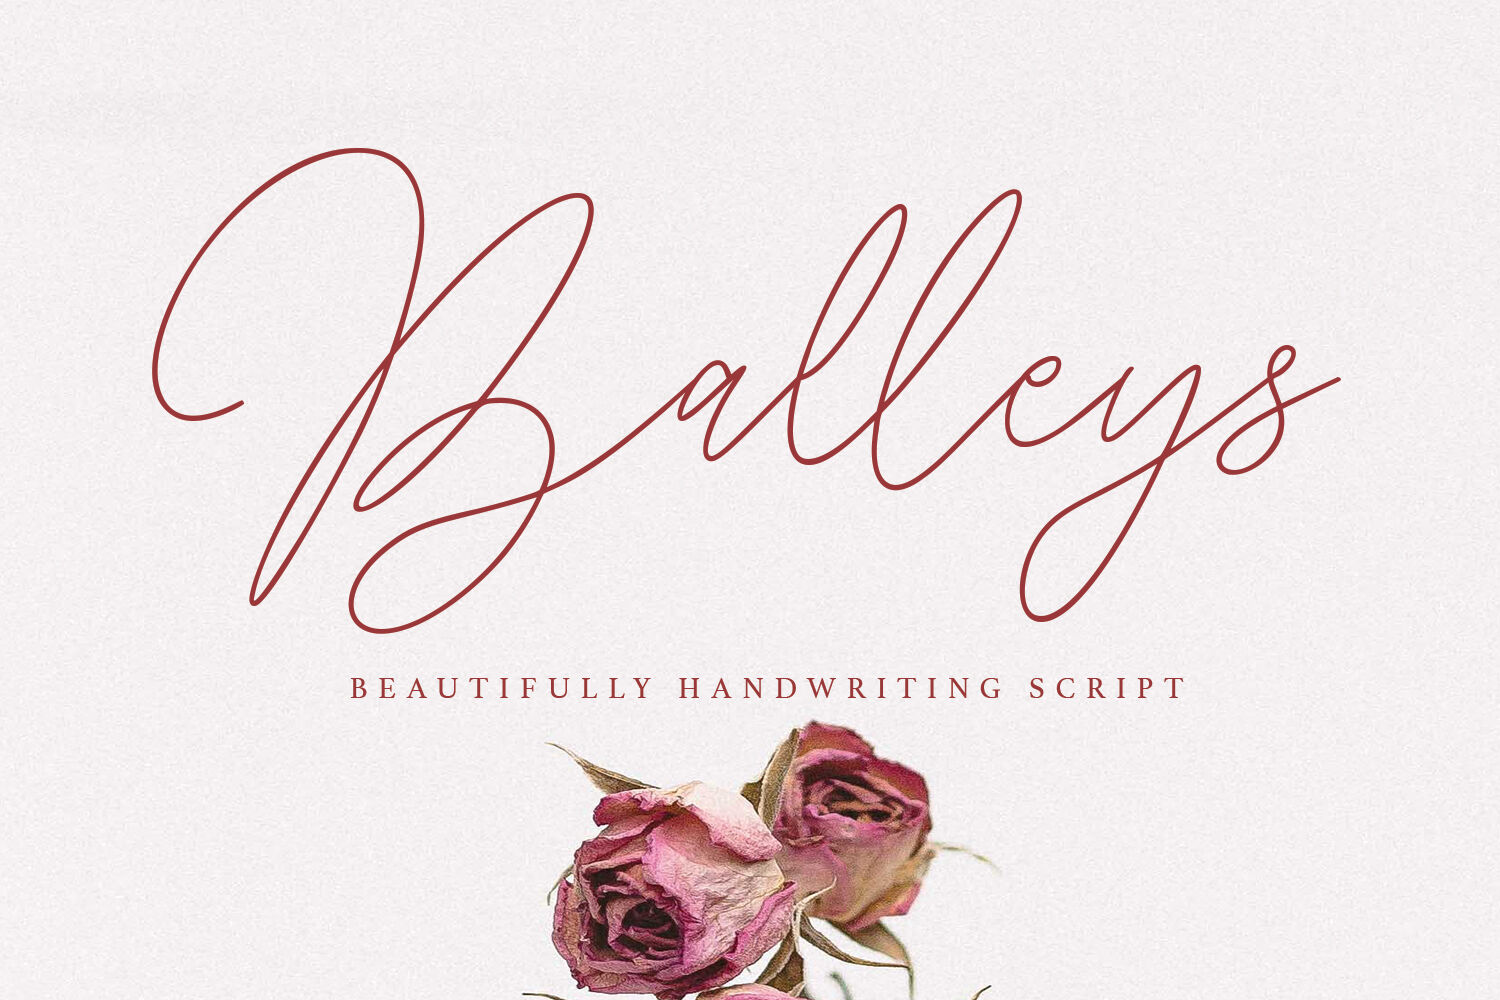 Balleys Beautiful Handwriting Script Font By Maulana Creative Thehungryjpeg Com